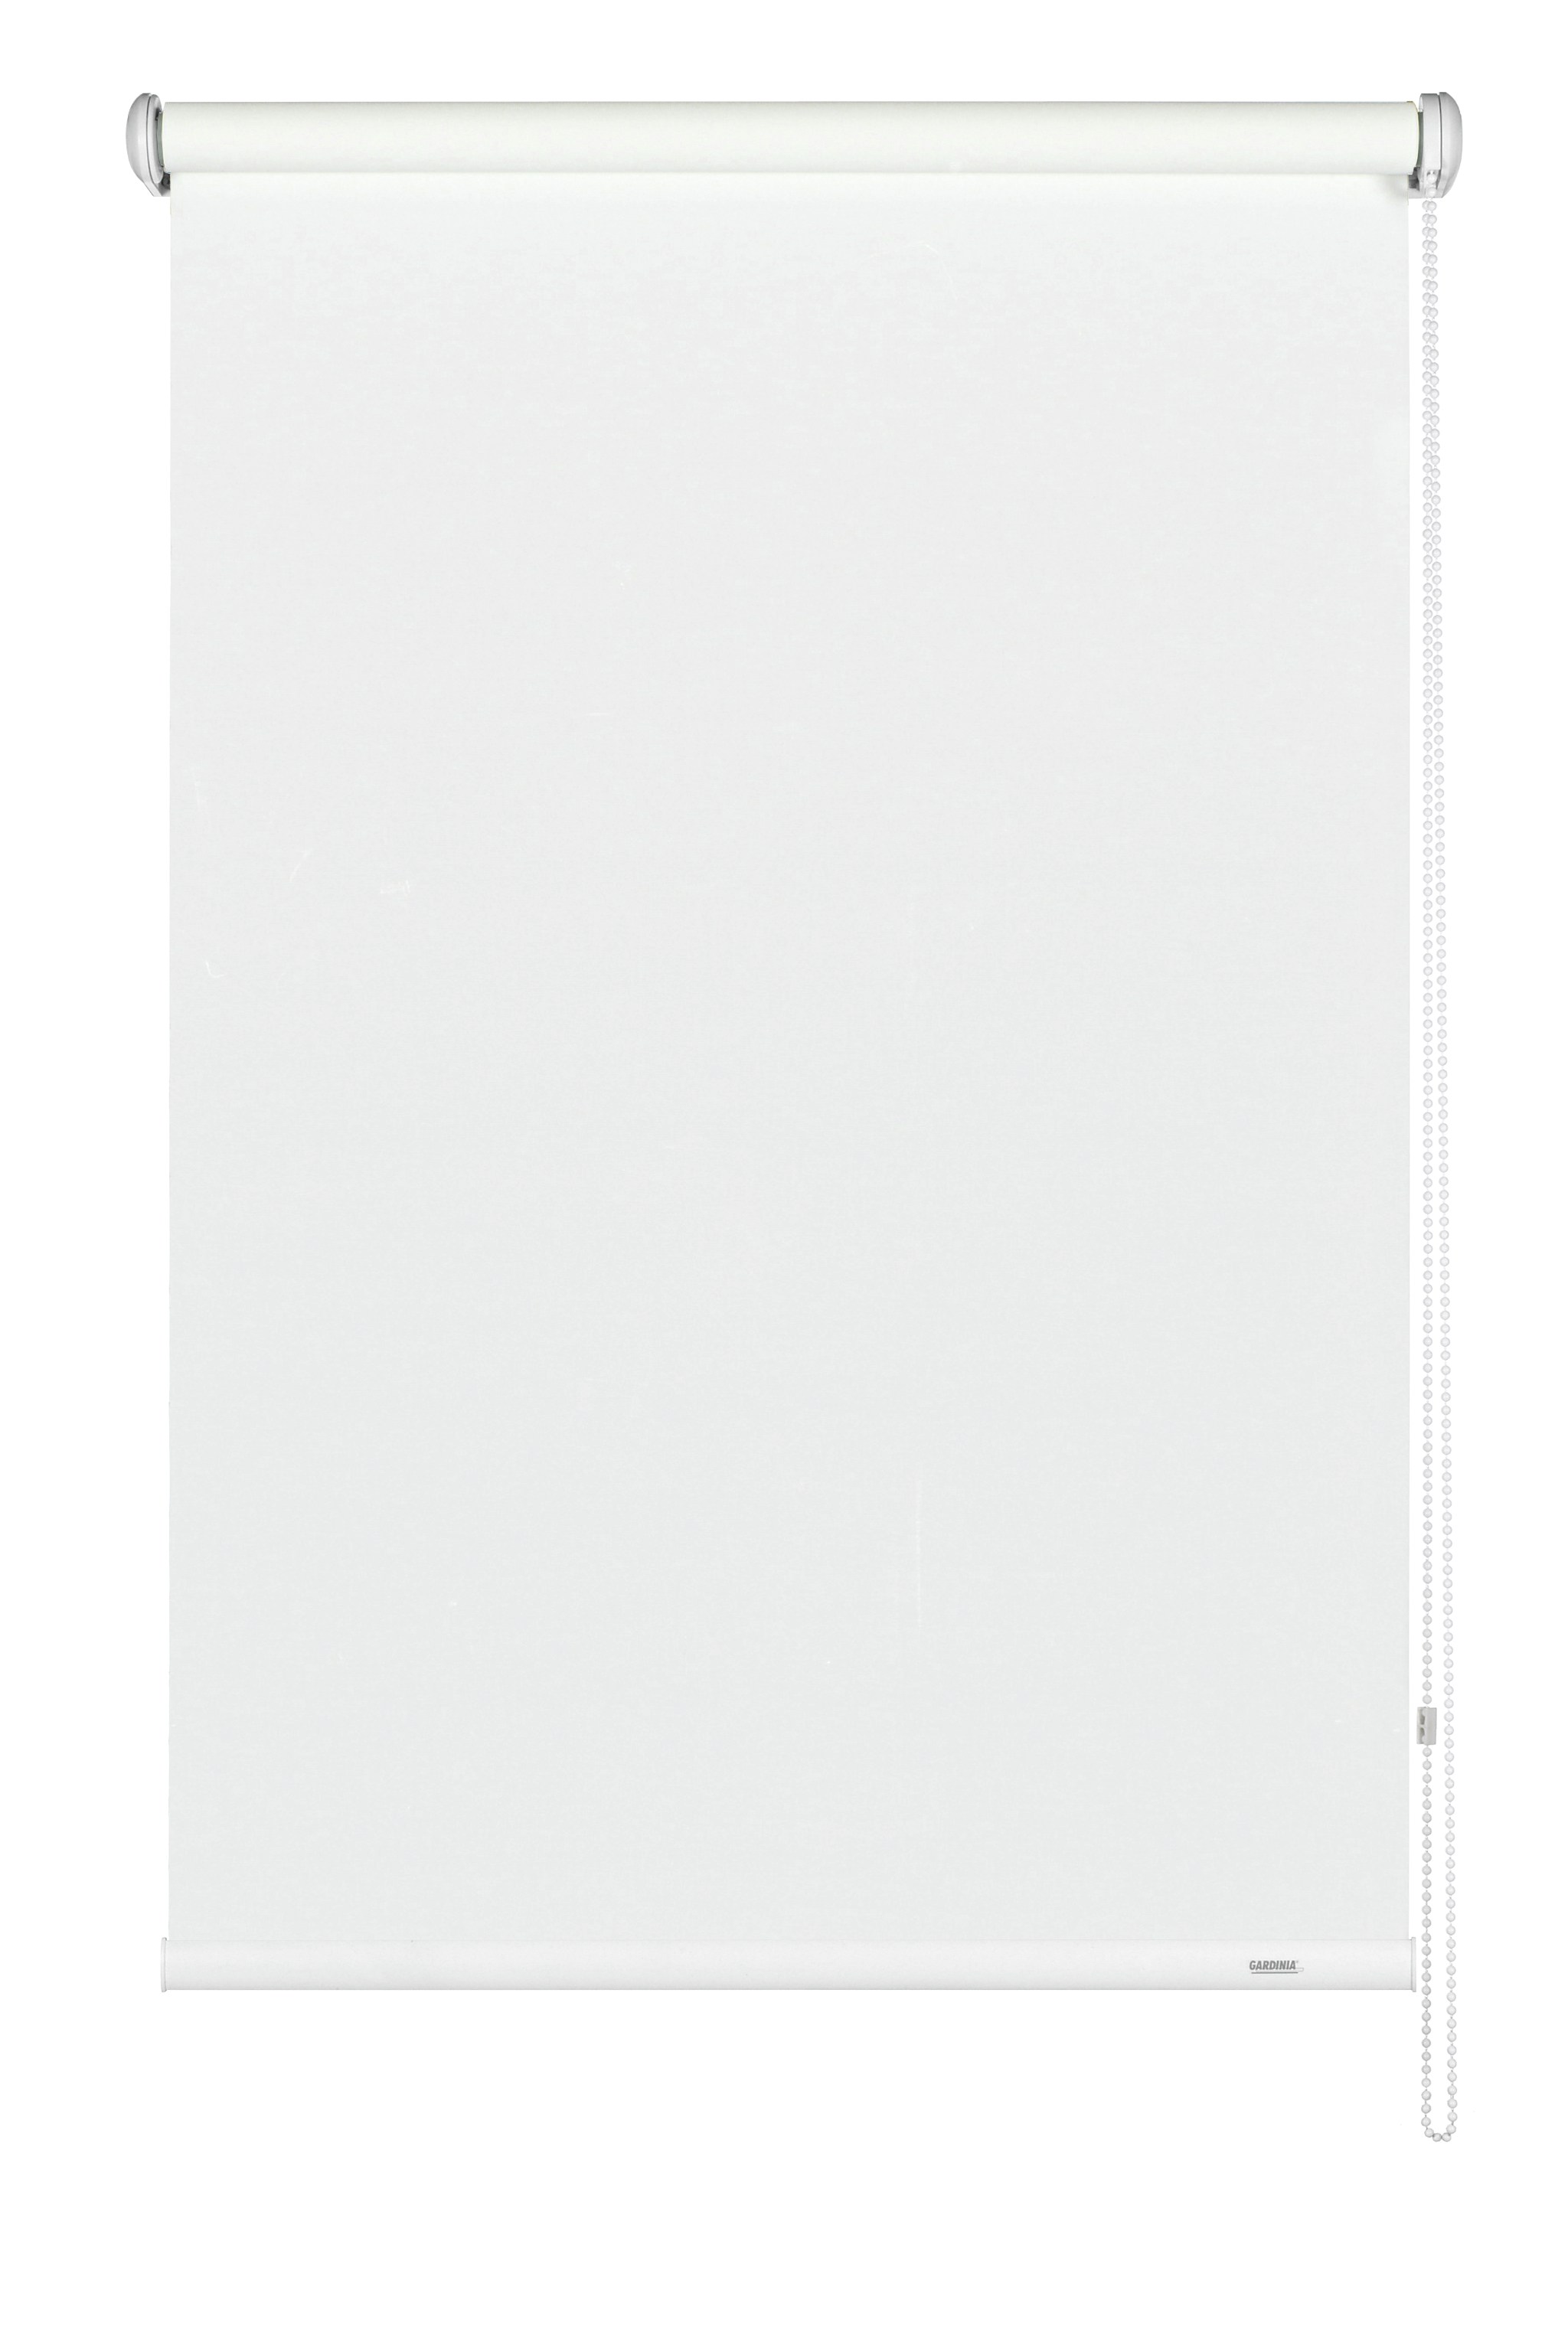 GARDINIA - Seitenzugrollo weiß 92x180cm 